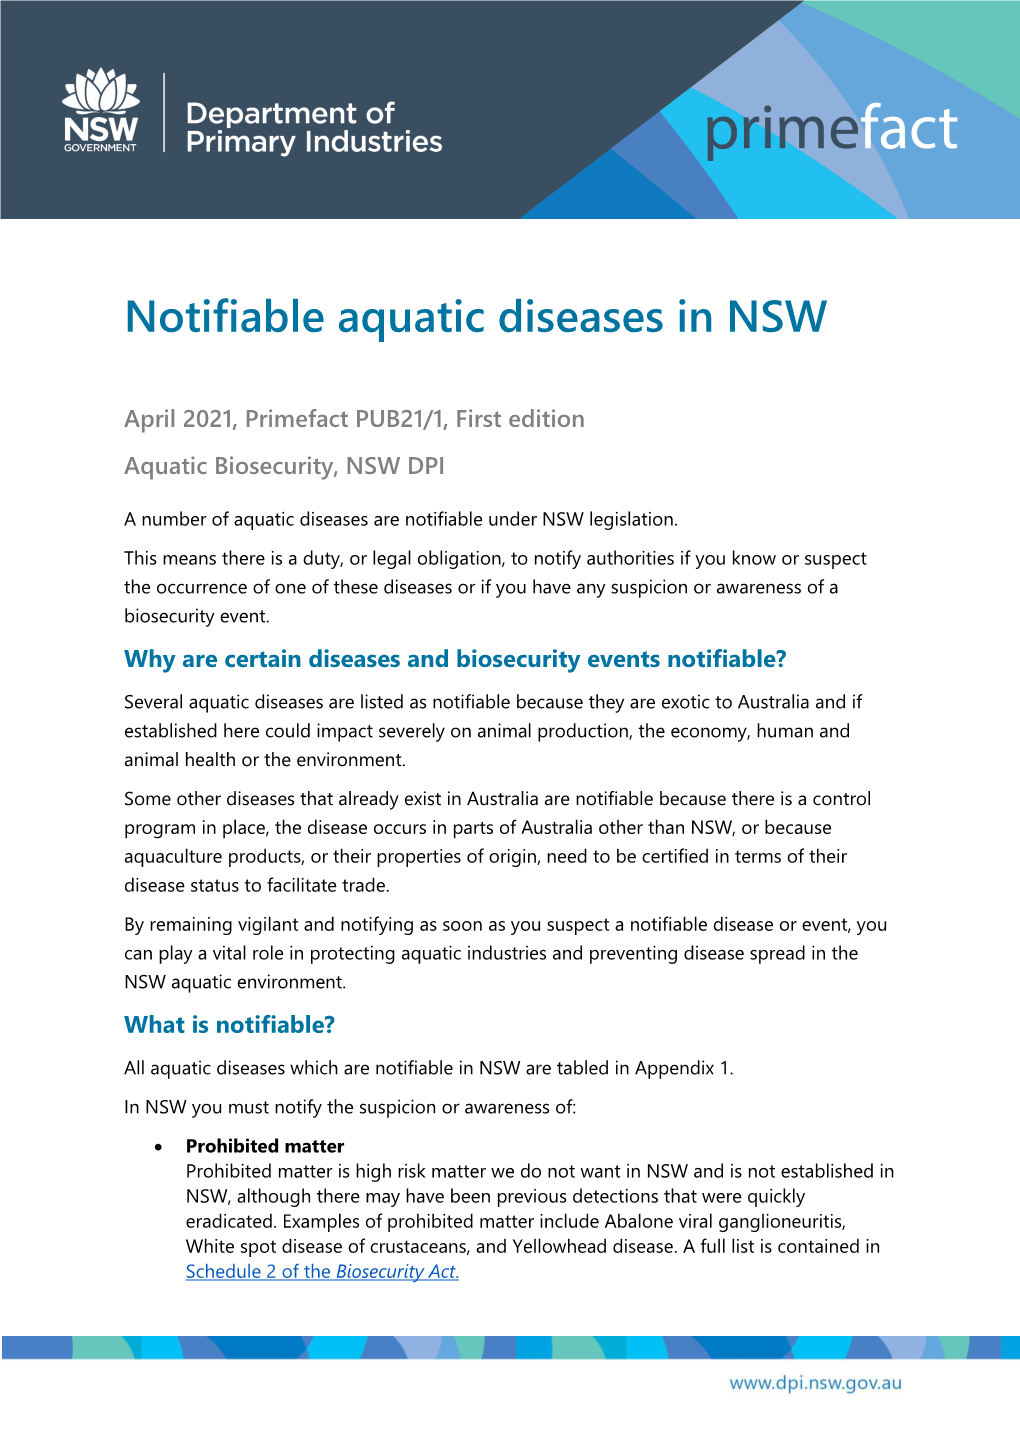 Notifiable Aquatic Diseases in NSW